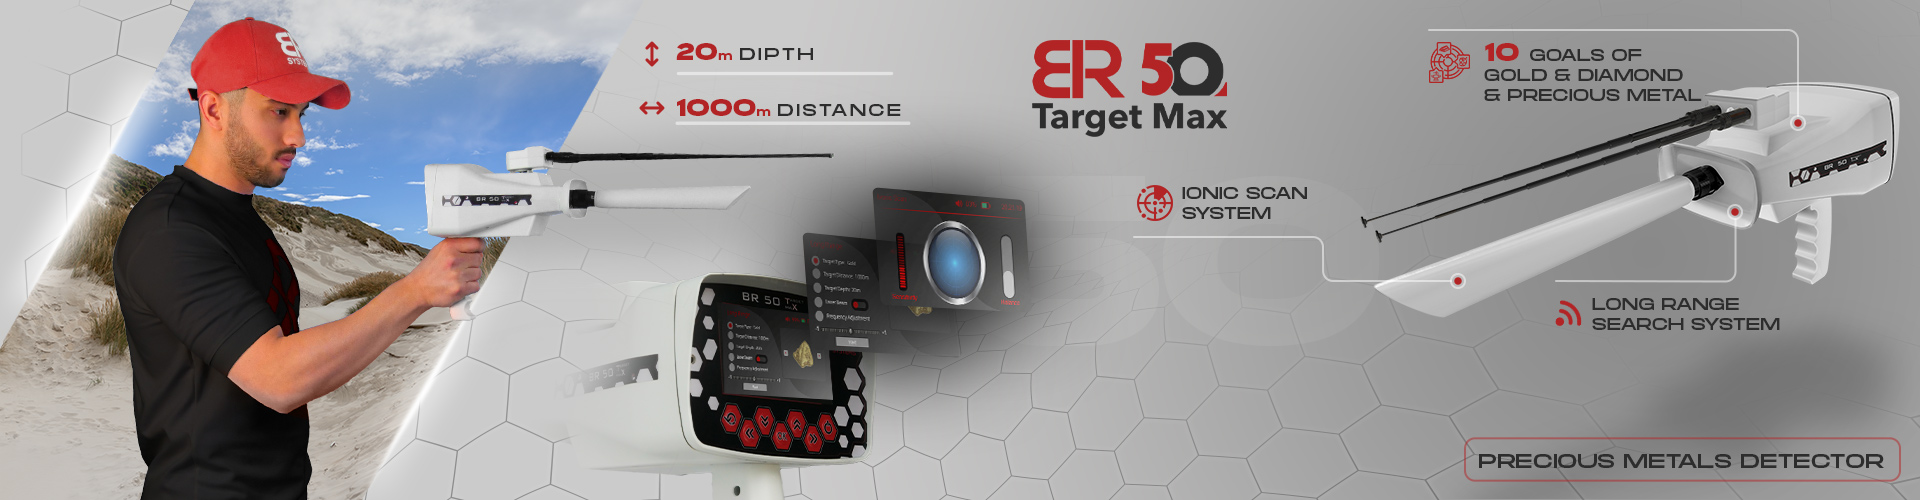 BR 50 Target Max - Metall- und Golddetektor